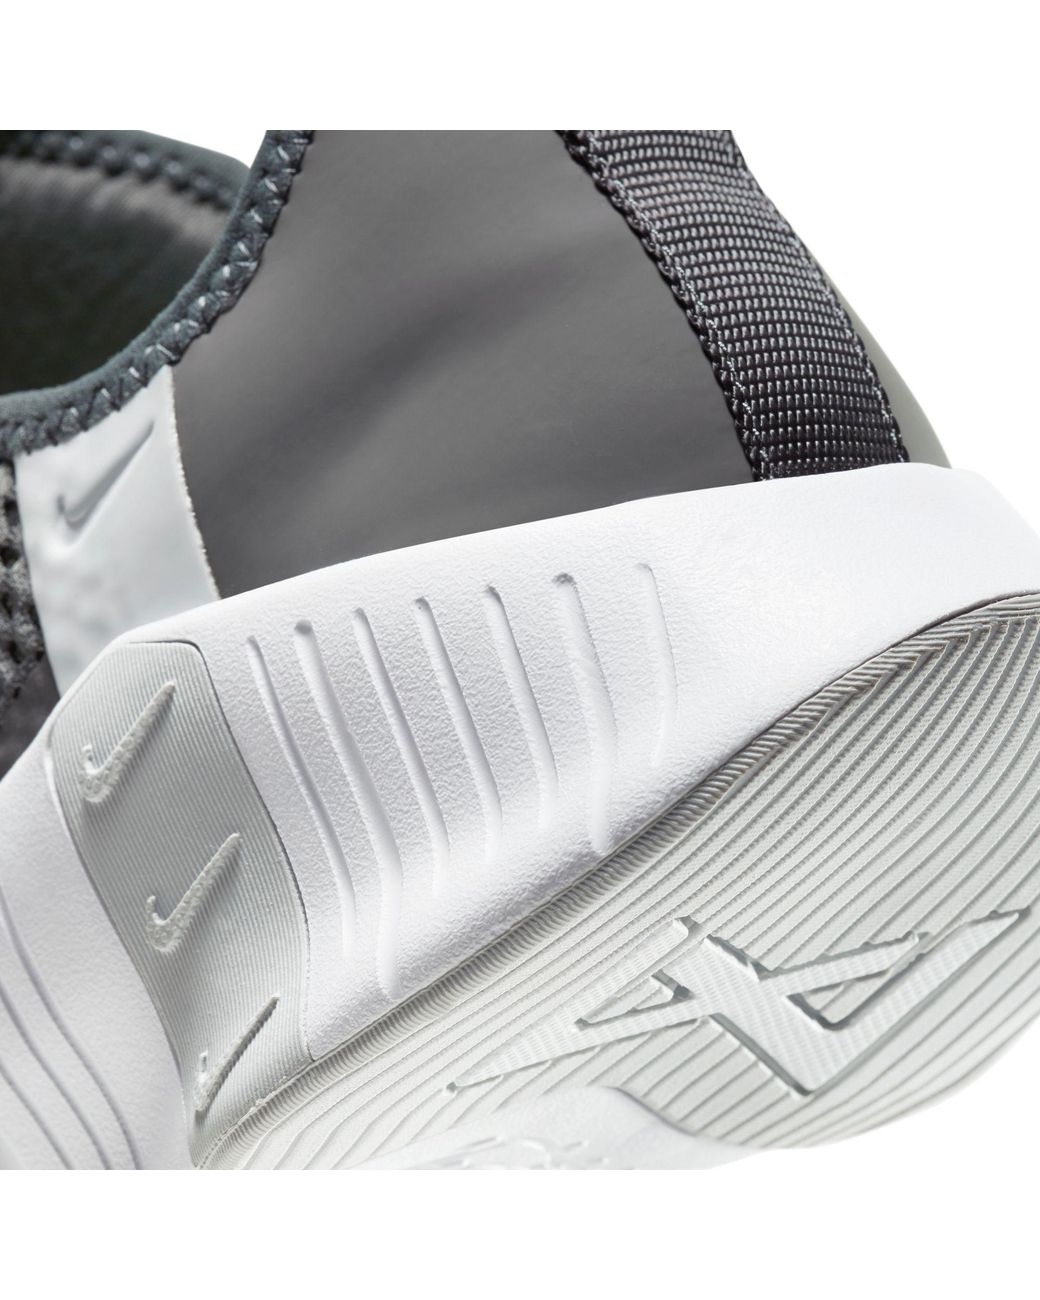 Nike Free Metcon 3 Training Shoe in Dark Grey/White (Gray) for Men - Save  11% | Lyst